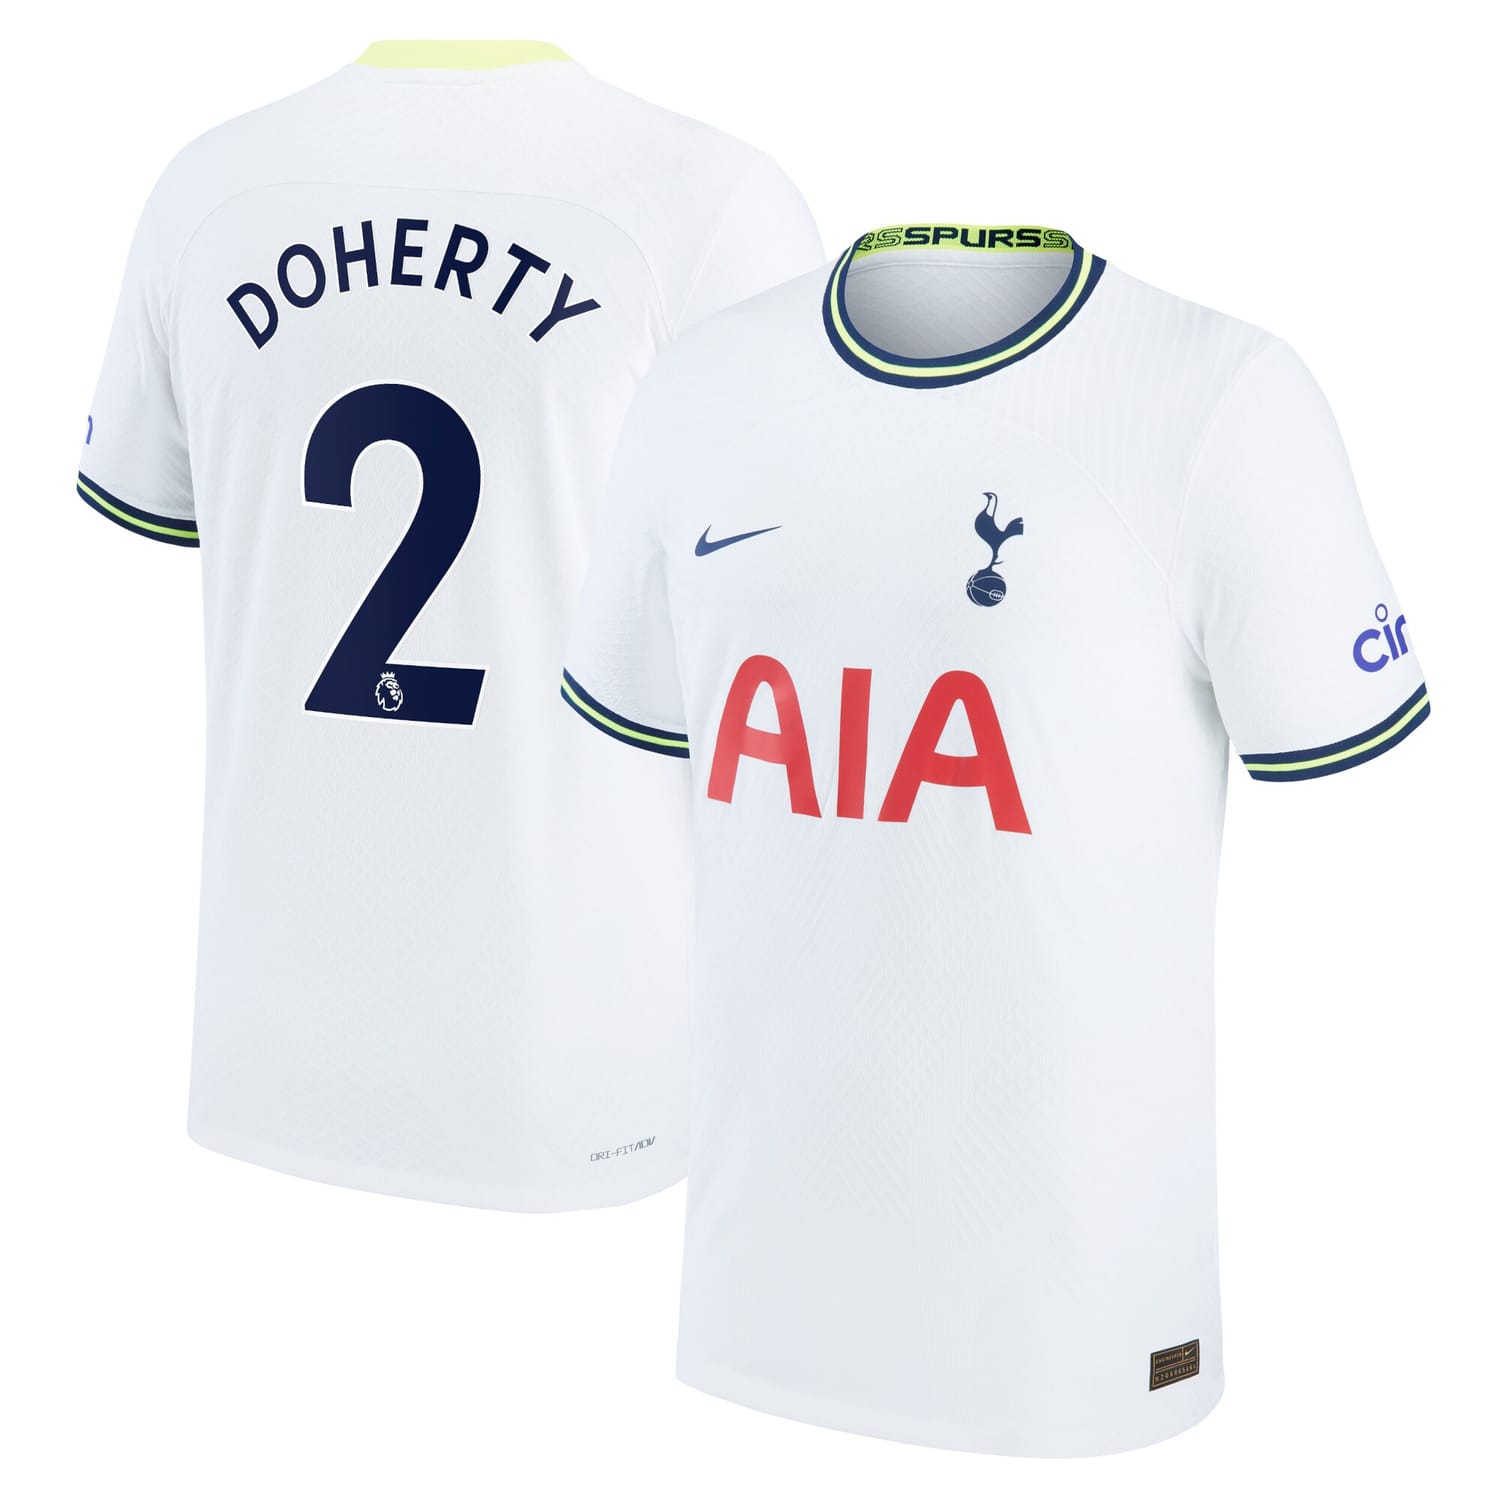 Premier League Tottenham Hotspur Home Authentic Jersey Shirt 2022-23 player Doherty 2 printing for Men